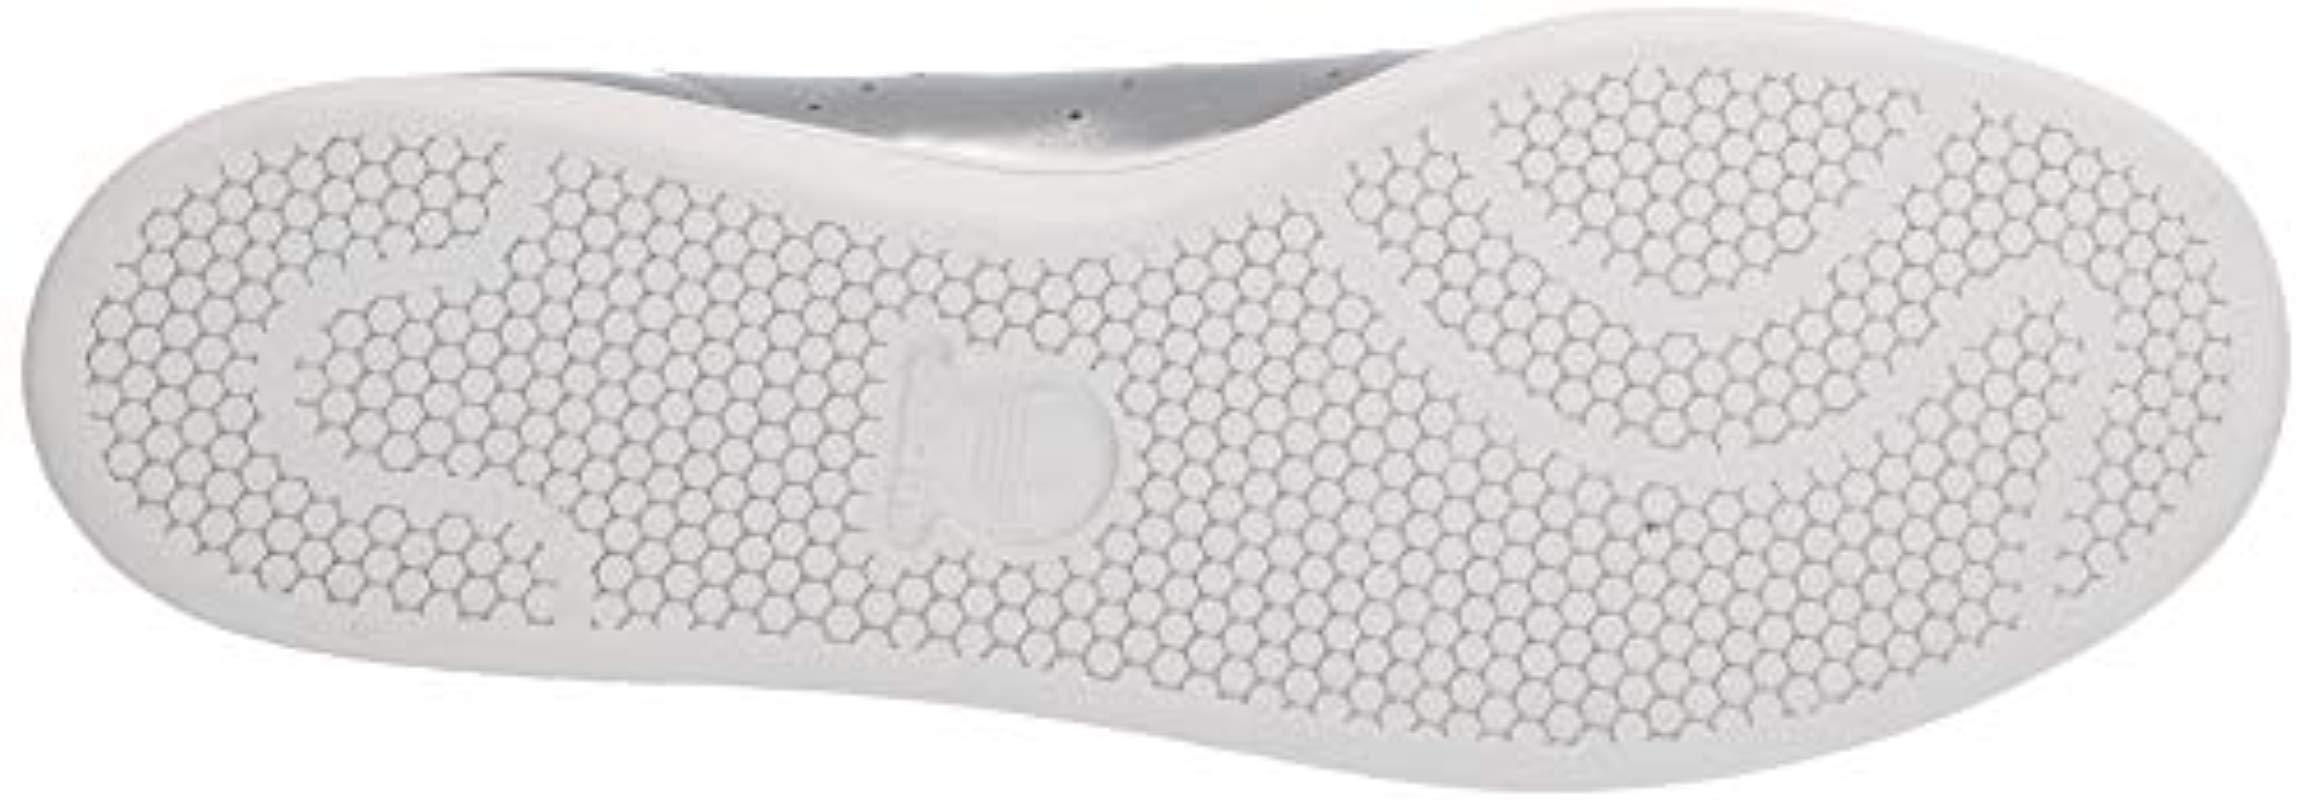 adidas Originals S Stan Smith Sneaker in Silver Metallic/Silver Metallic/  (Metallic) for Men - Save 44% | Lyst